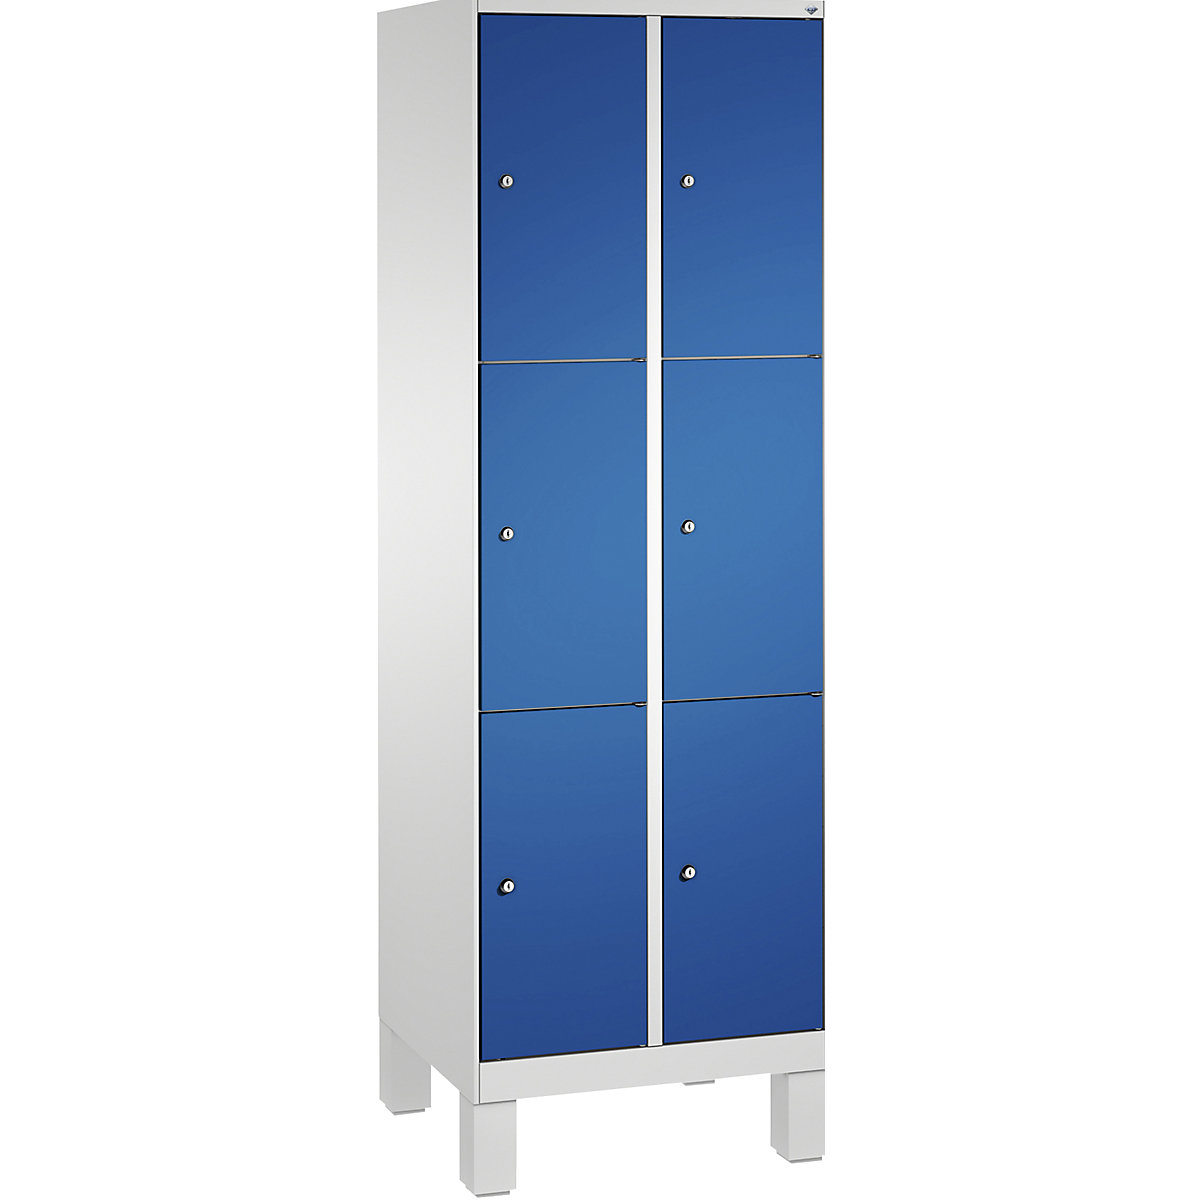 EVOLO locker unit, with feet – C+P, 2 compartments, 3 shelf compartments each, compartment width 300 mm, light grey / gentian blue-15